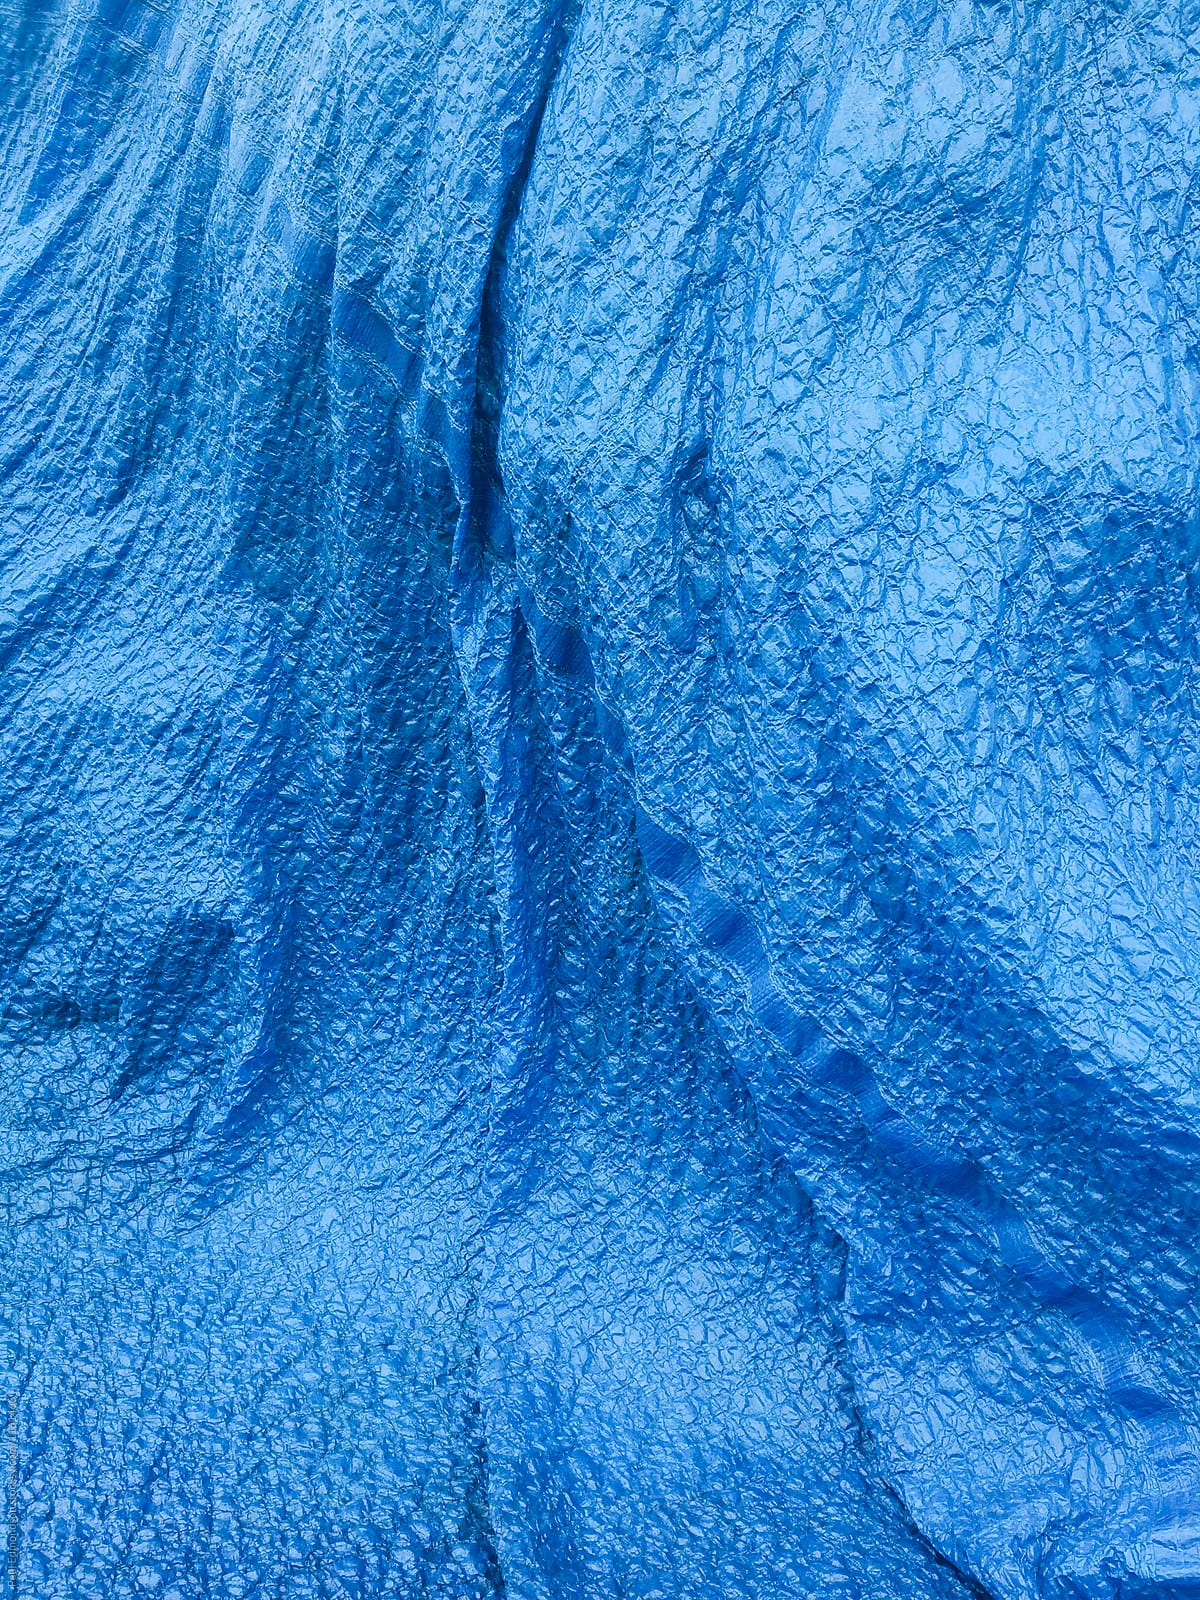 Close up of blue tarpaulin